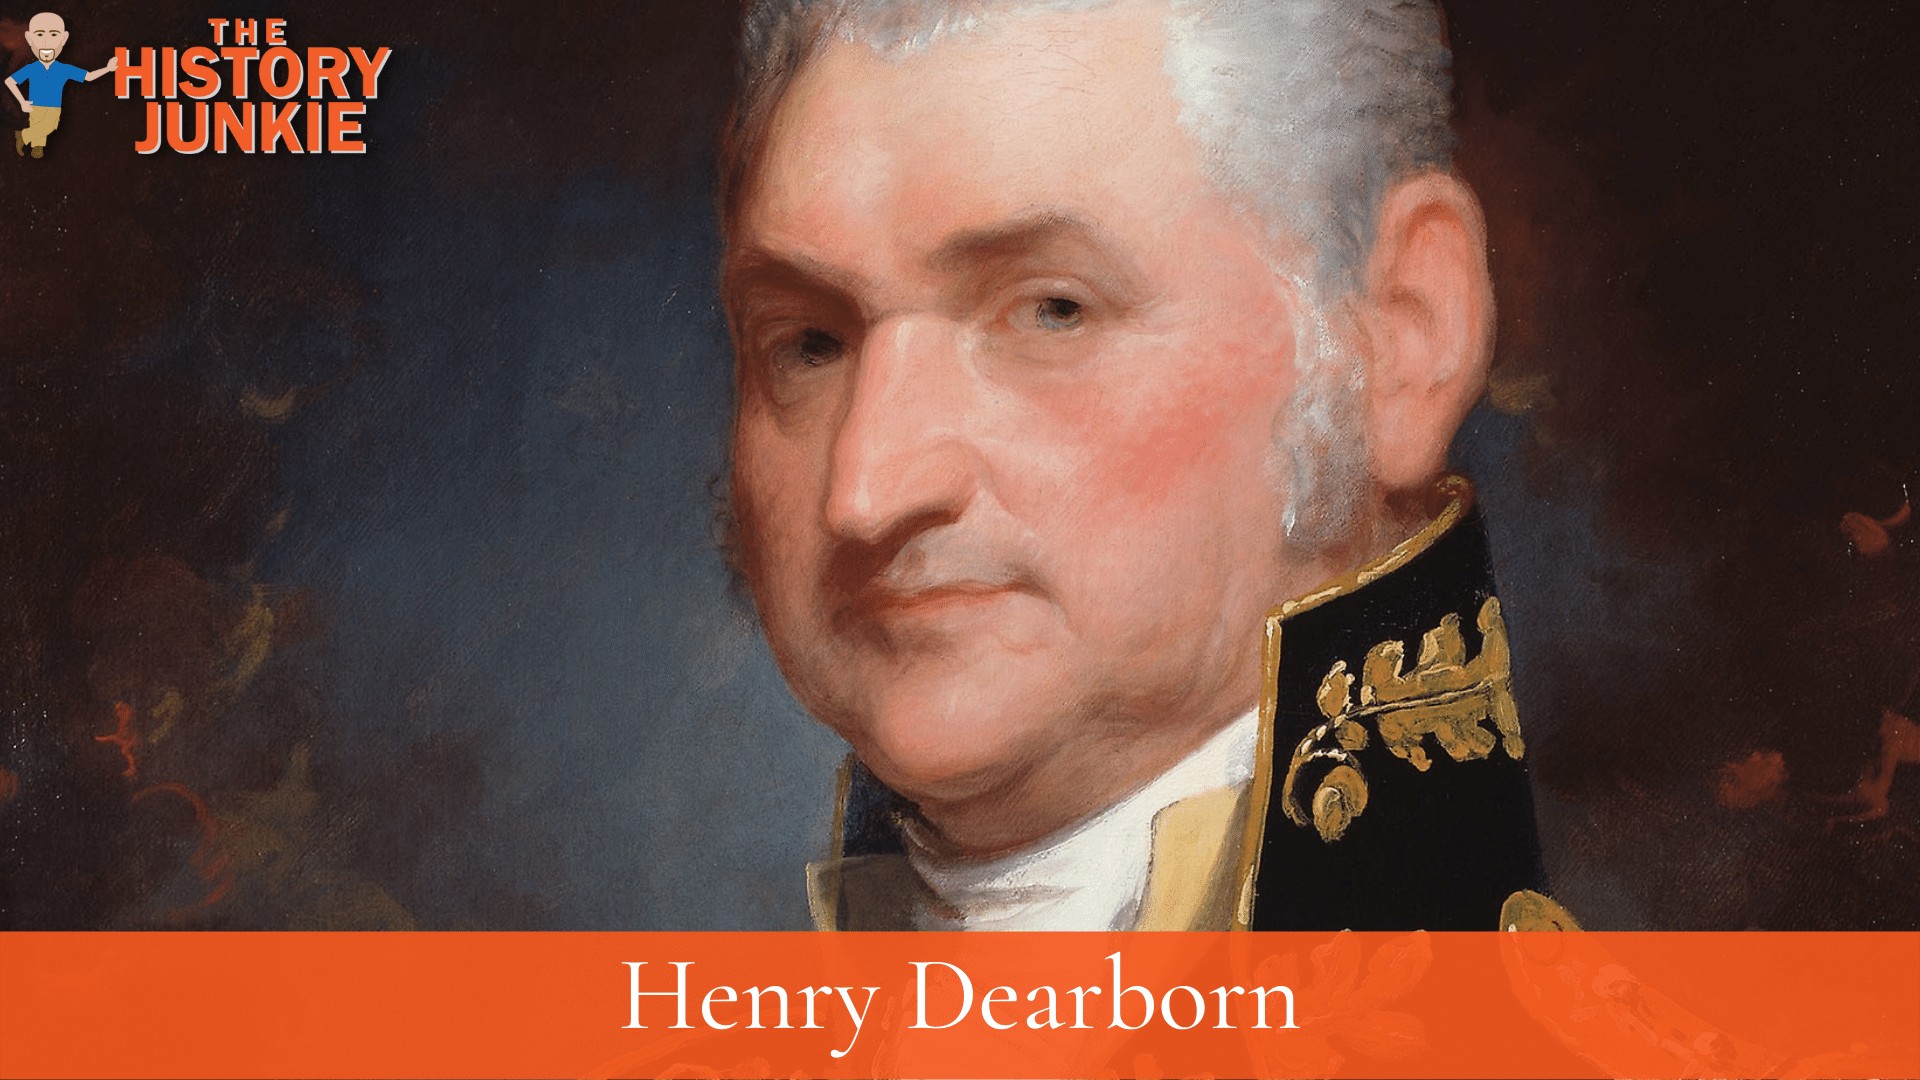 Henry Dearborn